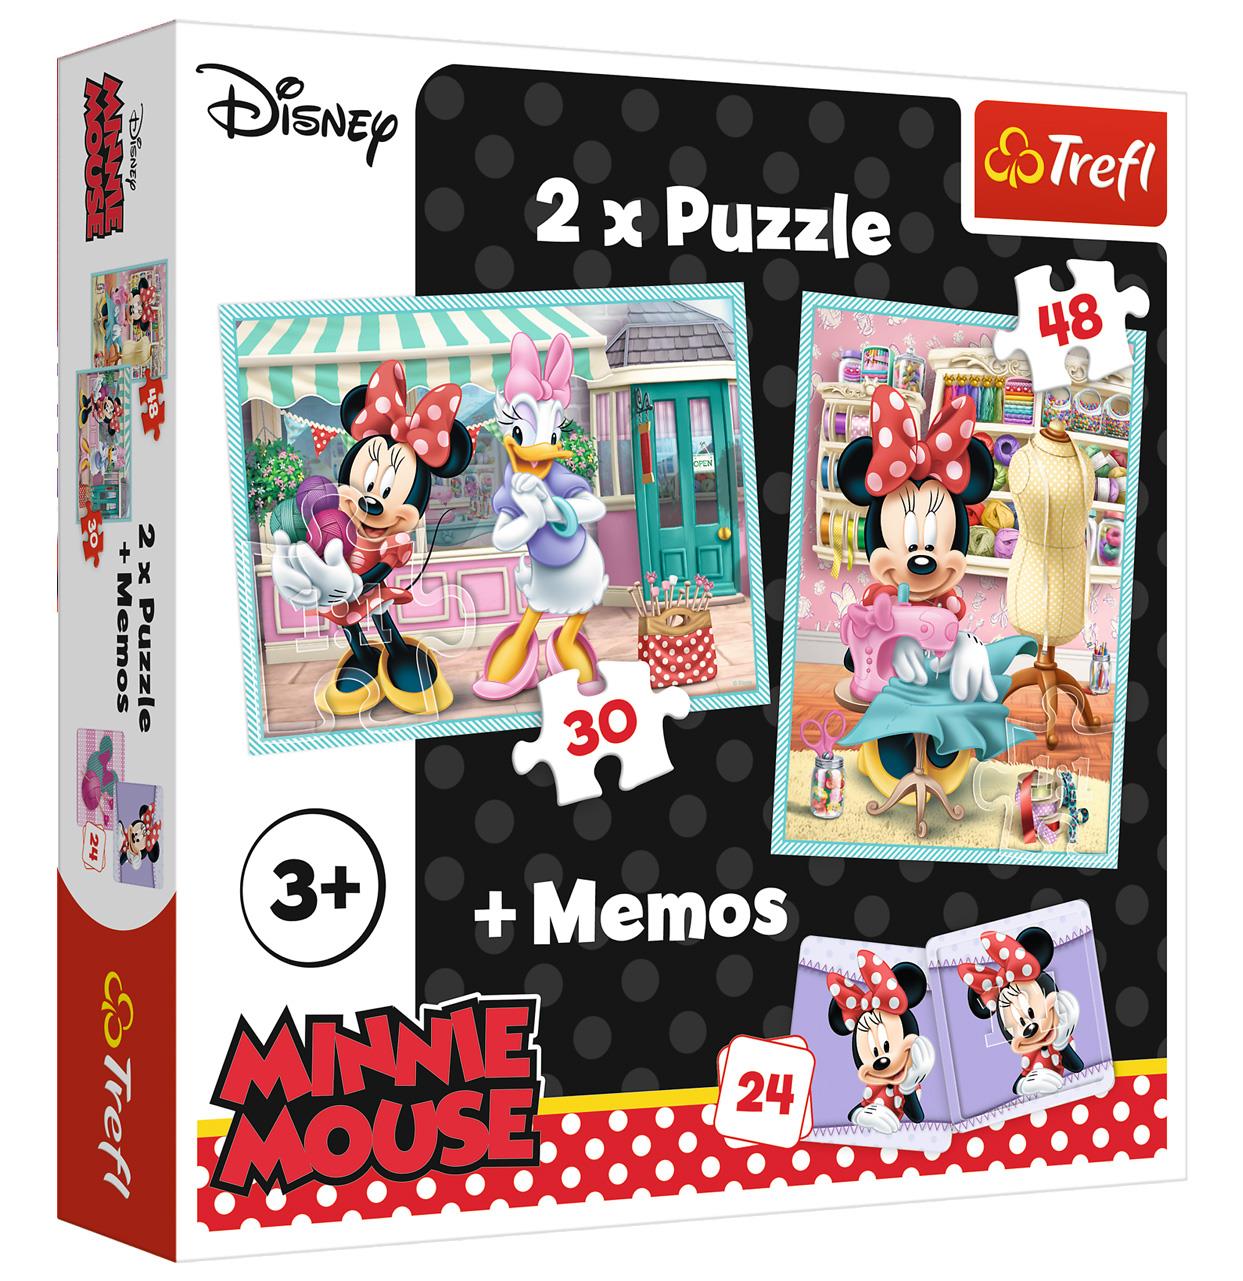 Trefl Çocuk Puzzle 90605 Minnie's Hobby, Disney 2 in 1 + Memos Puzzle